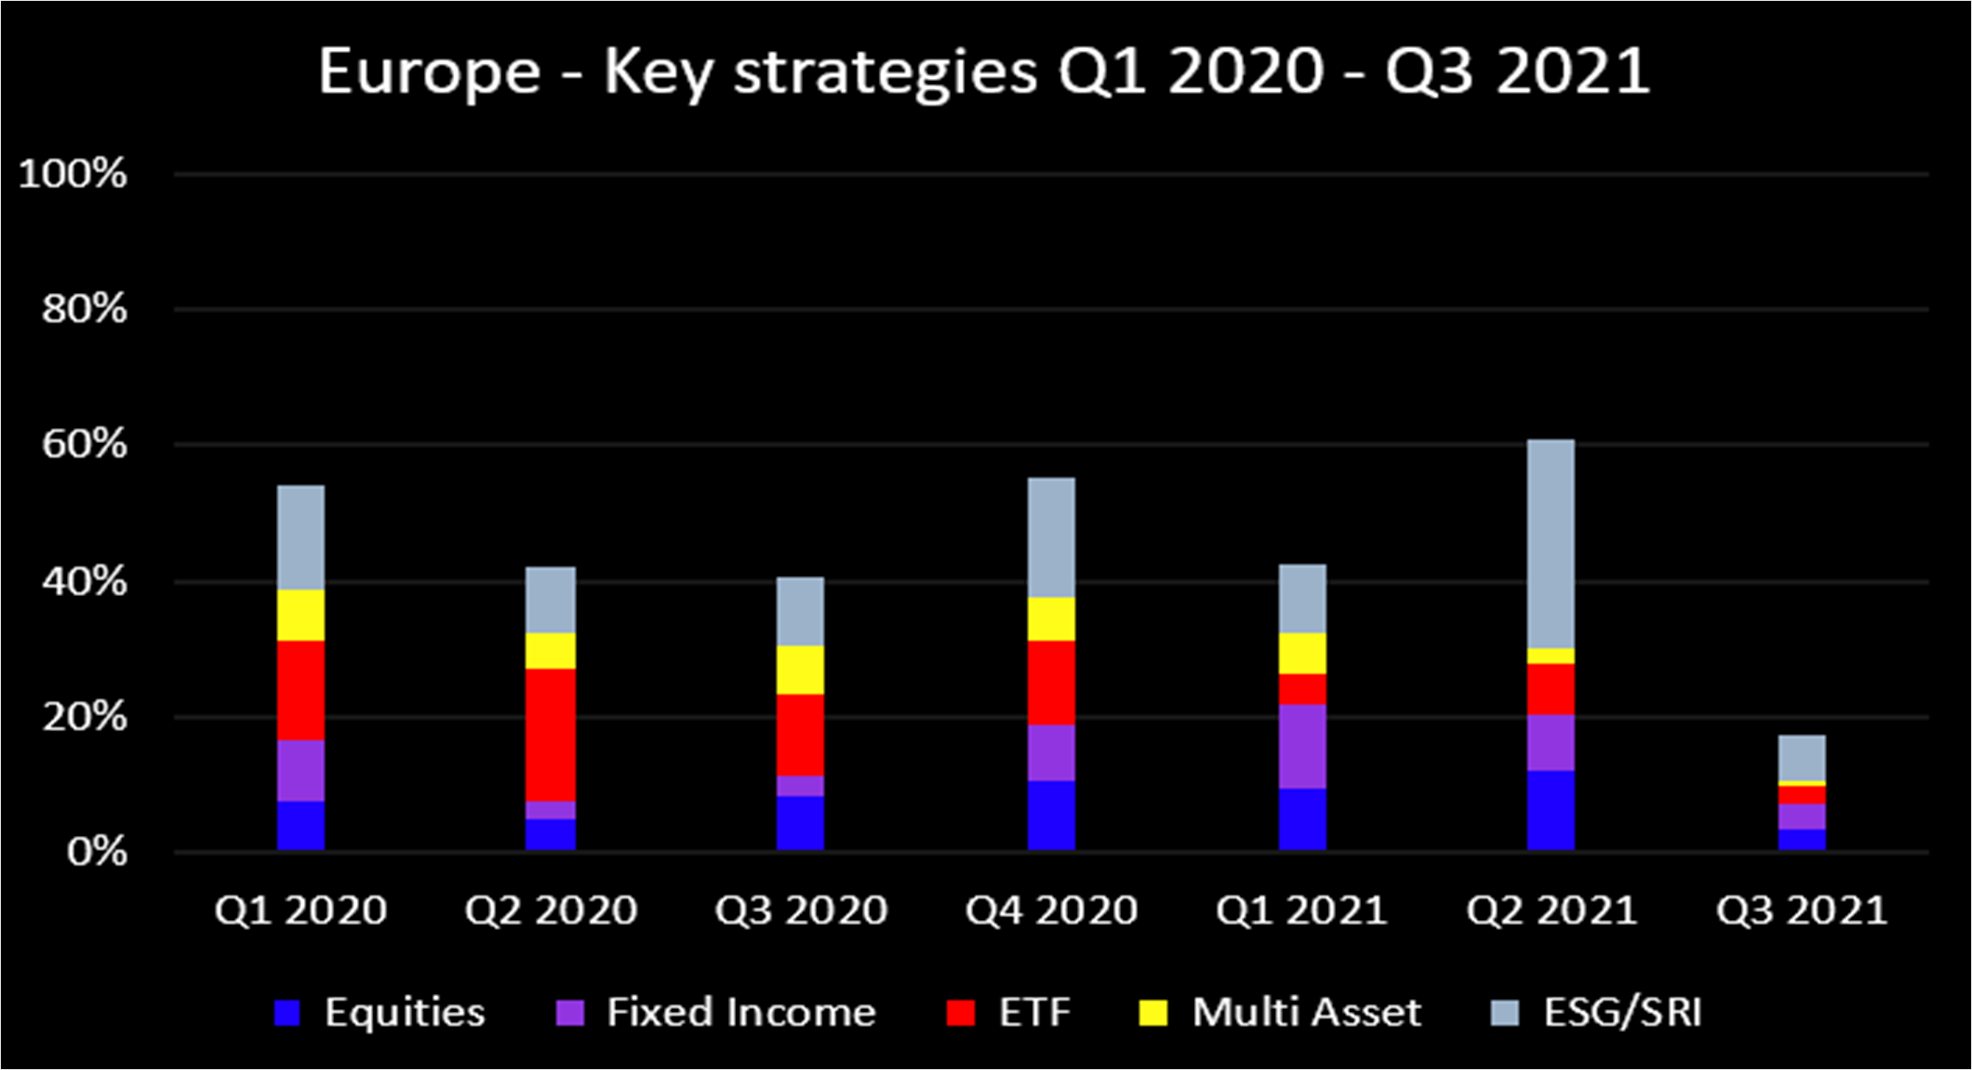 Q3 2021 Europe key strategies